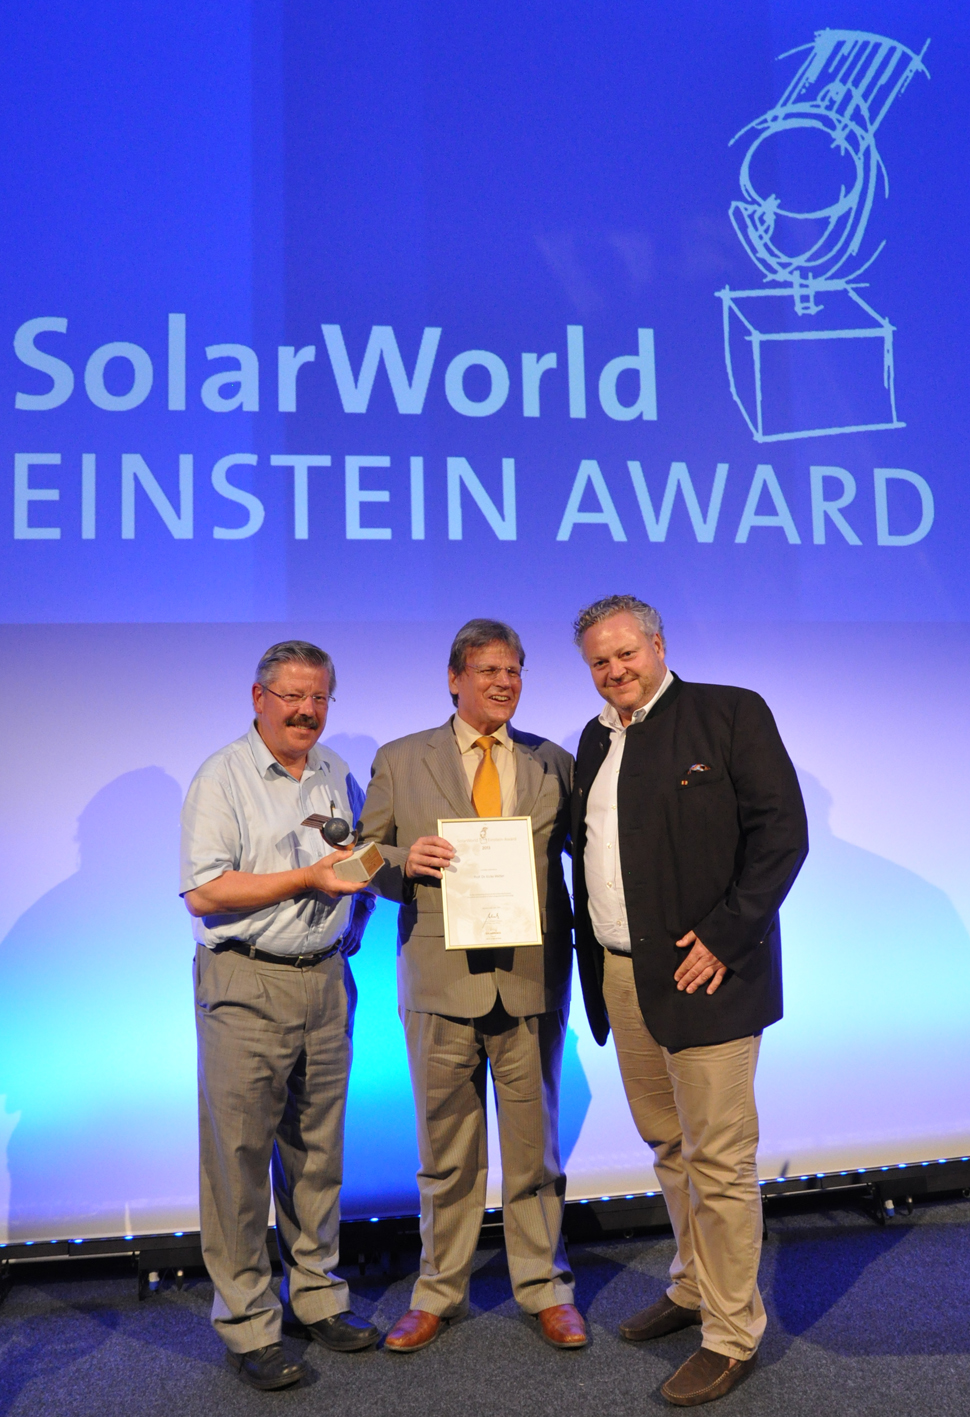 SolarWorld Einstein Award 2013: f.l.t.r. Dr. Winfried Hoffmann, laudator,Prof. Dr. Eicke R. Weber, prize winner and Dr. Frank Asbeck, CEO SolarWorld AG. 